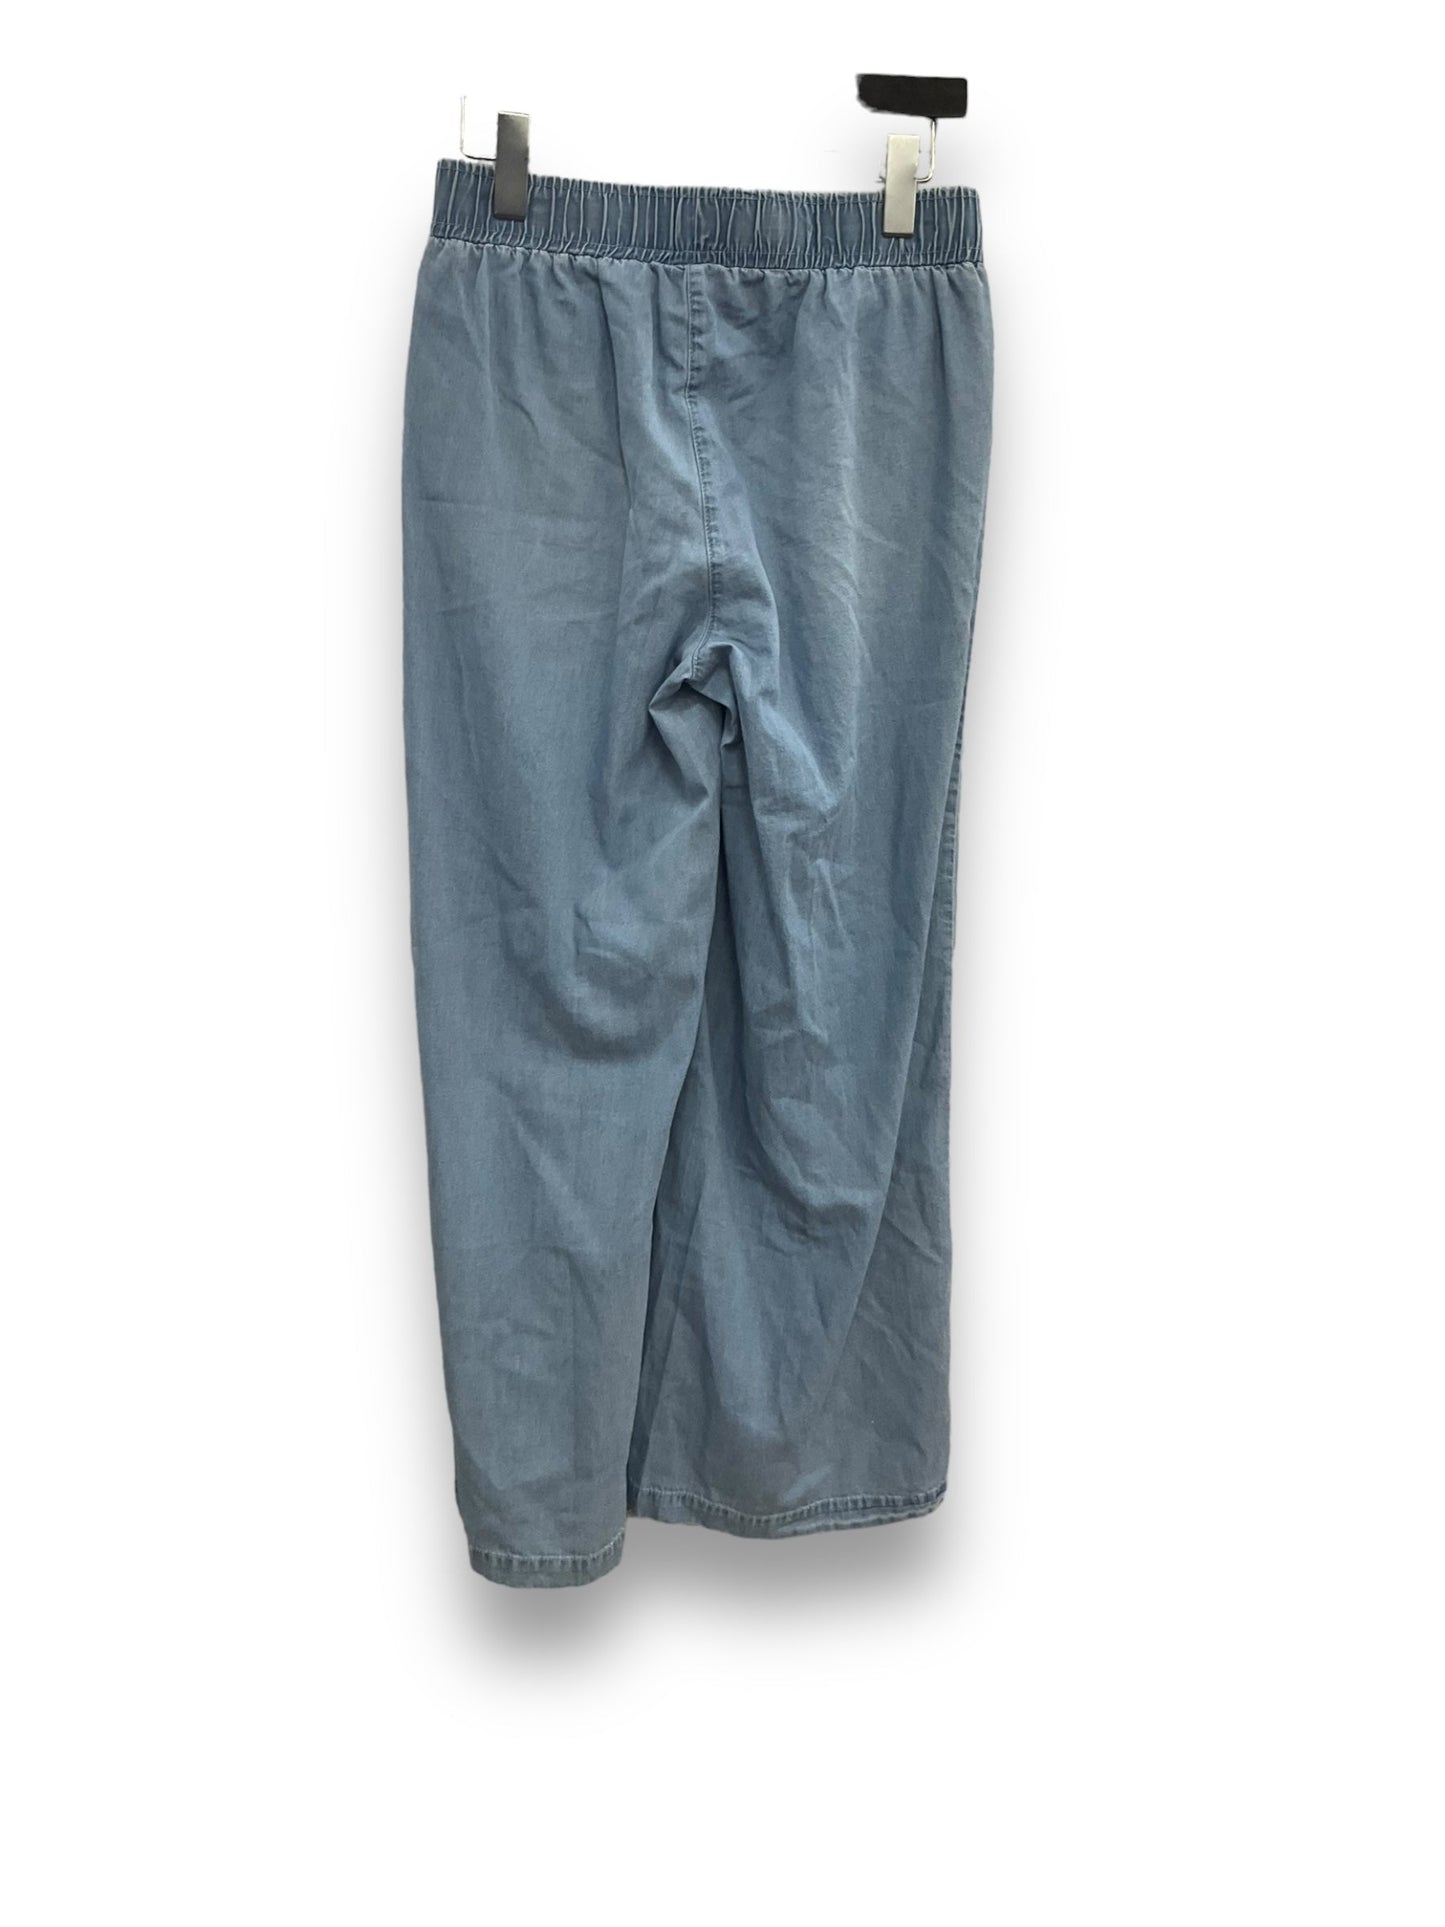 Pants Joggers By Diane Gilman  Size: S